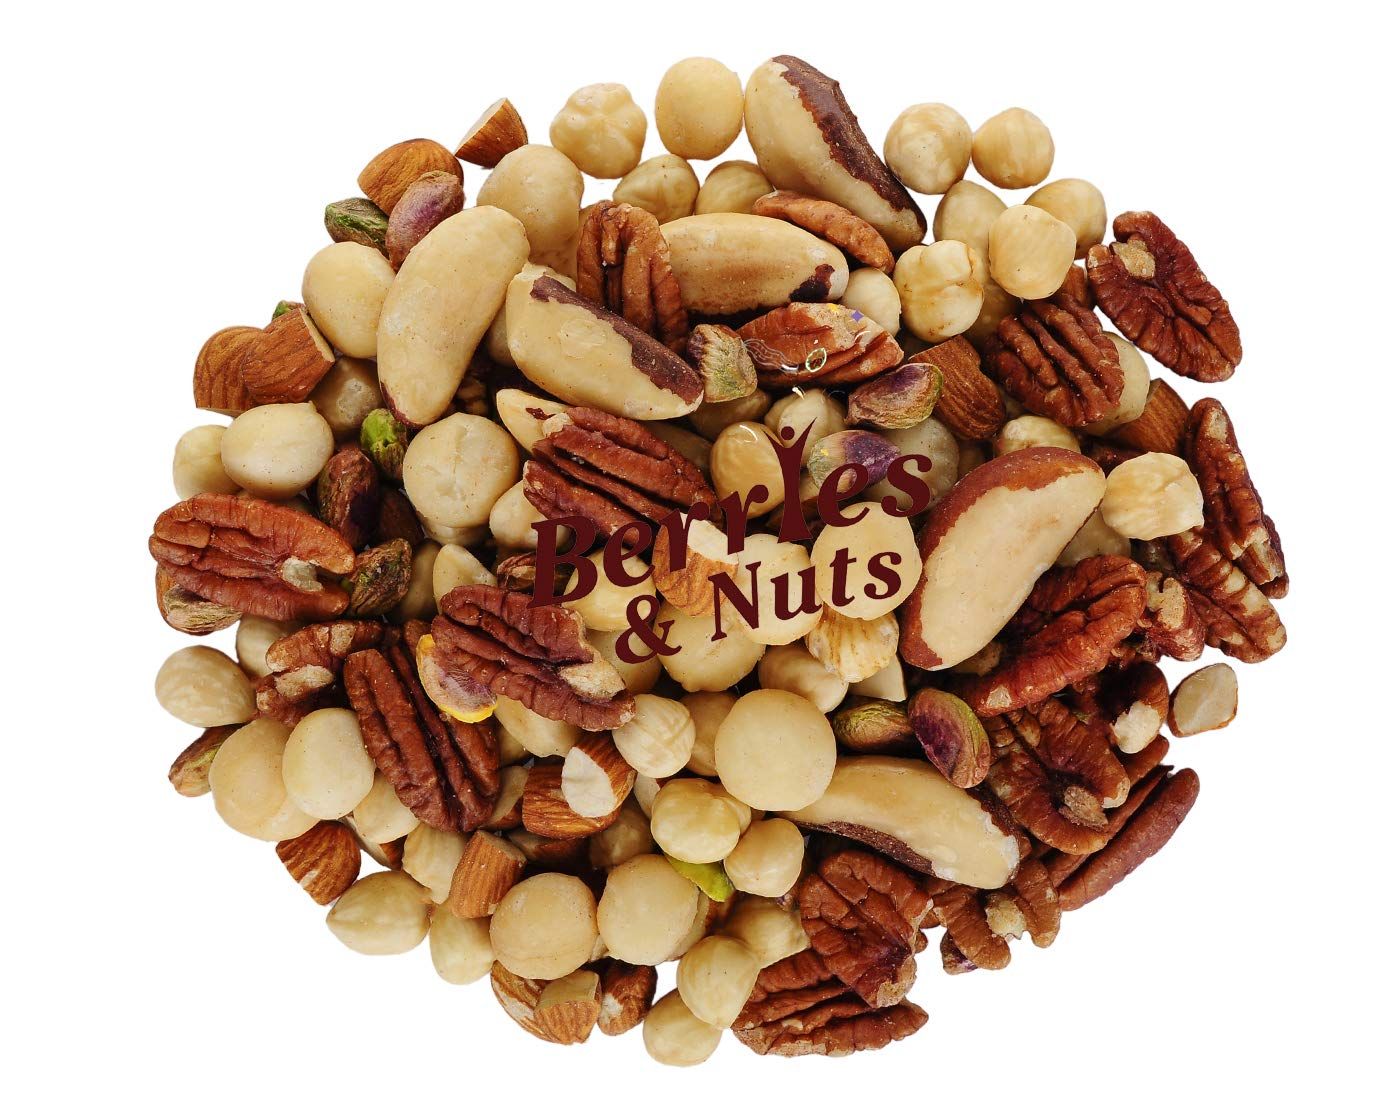 Berries & Nuts Magic Nut Mix Image